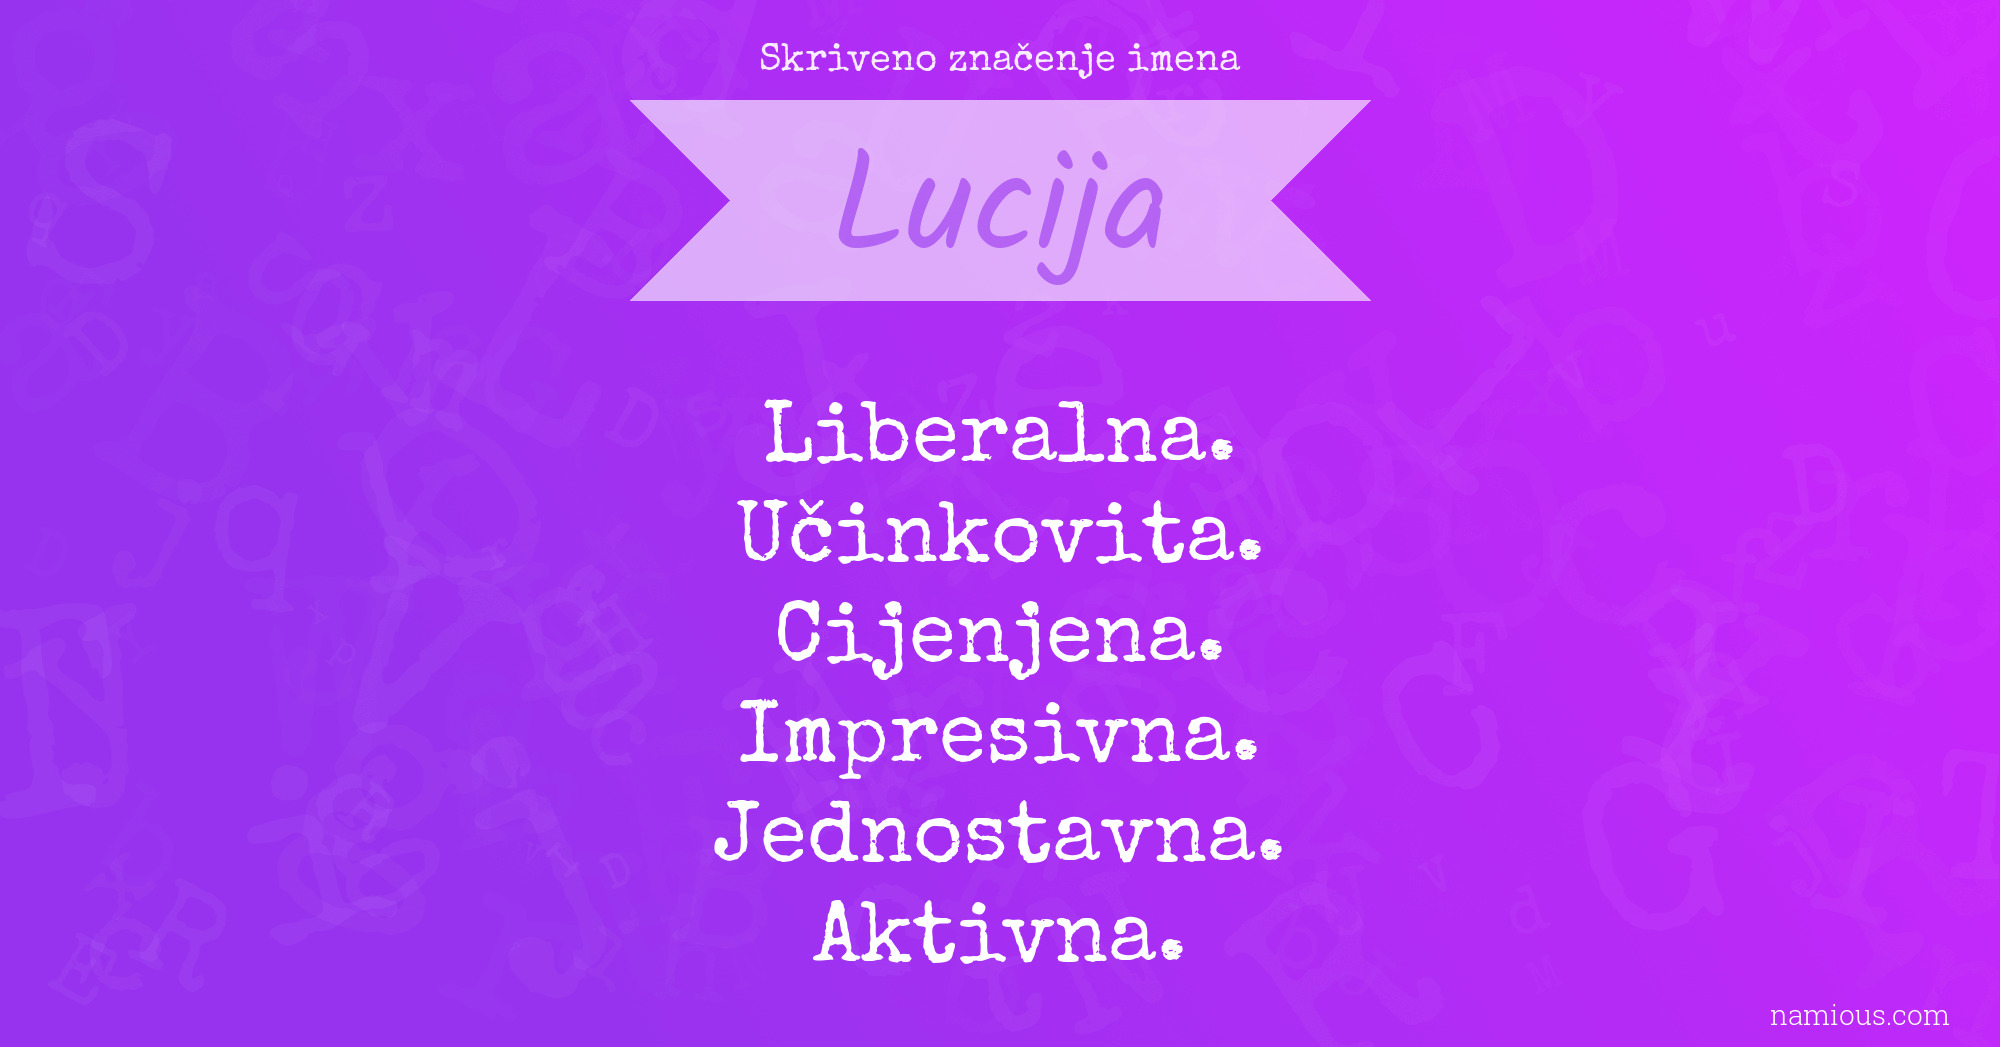 Skriveno značenje imena Lucija